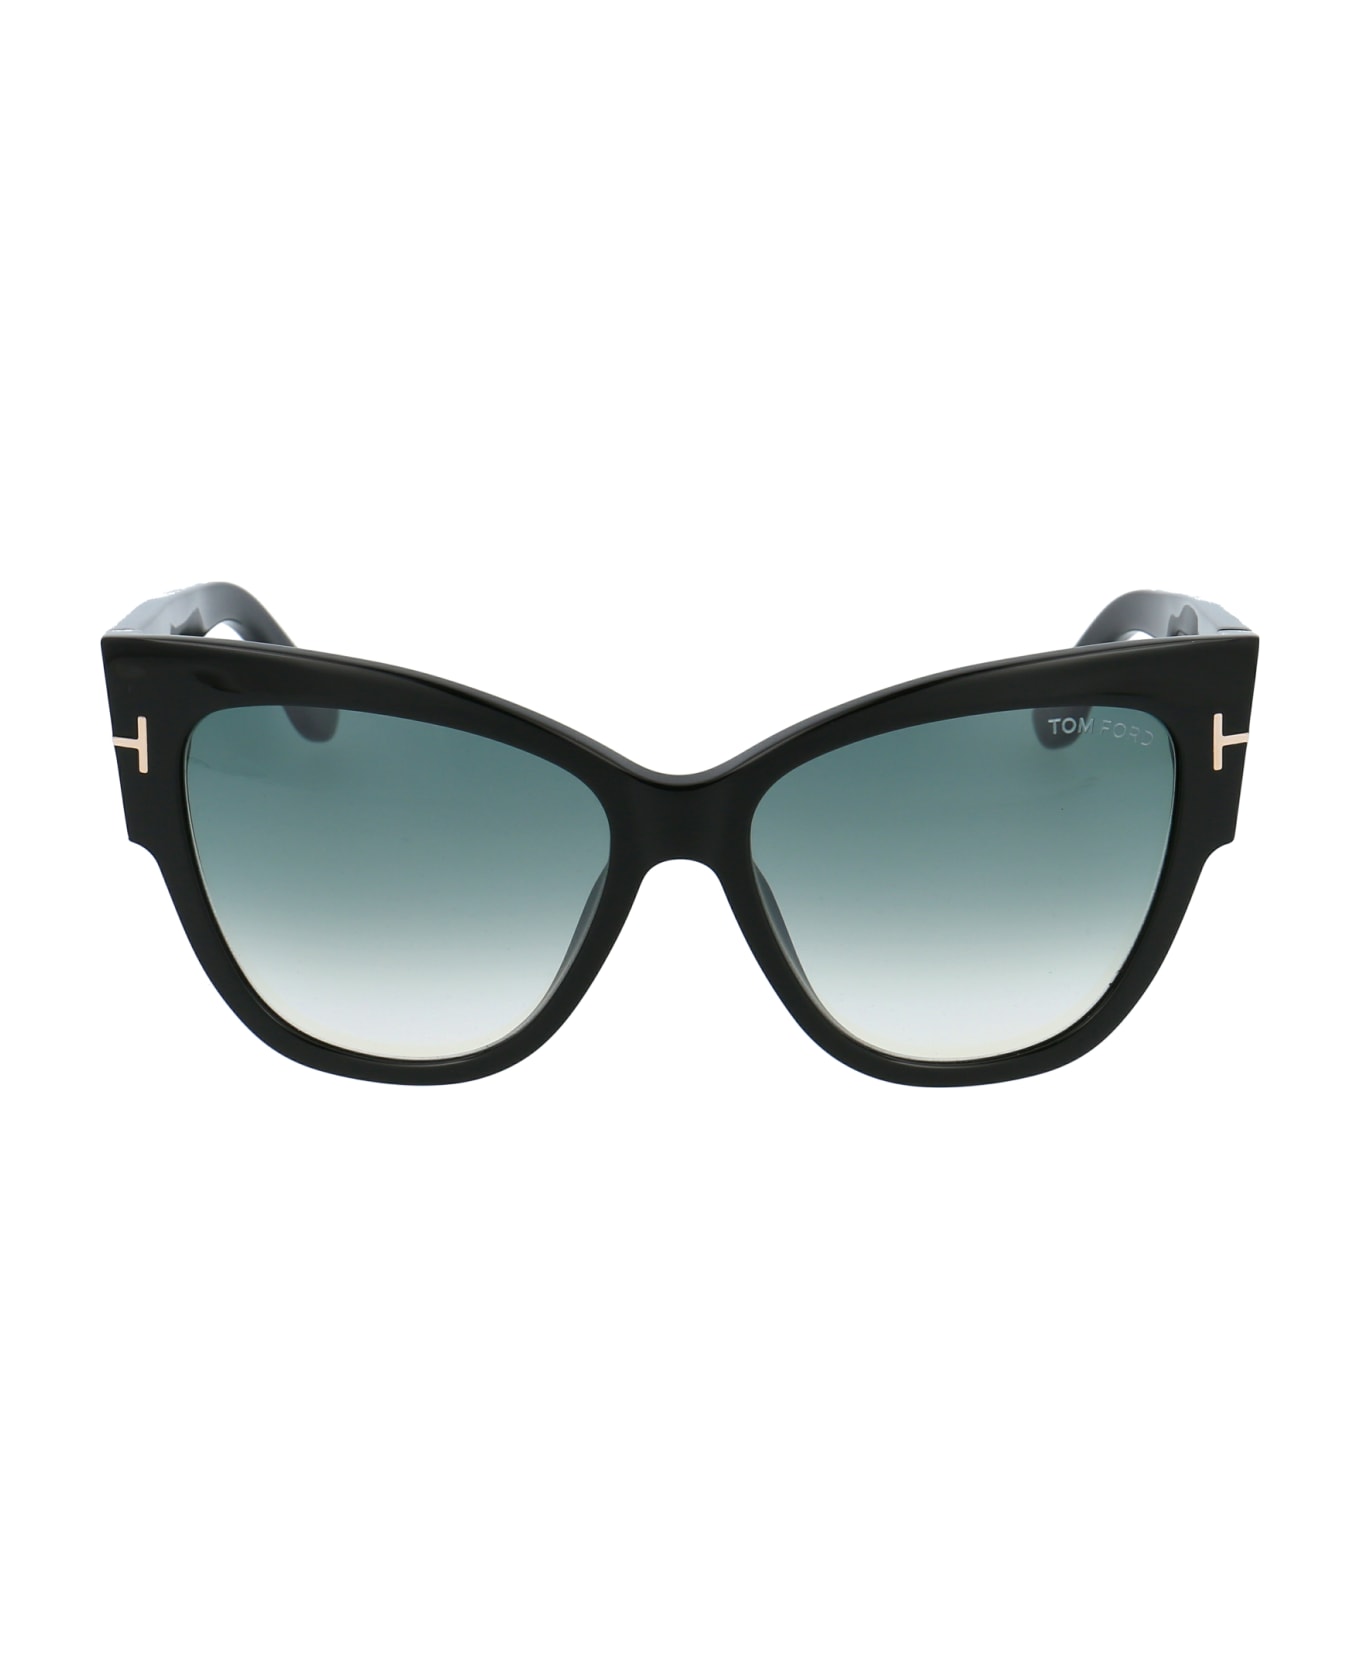 Tom Ford Eyewear Anoushka Sunglasses - 01B Nero Lucido / Fumo Grad サングラス